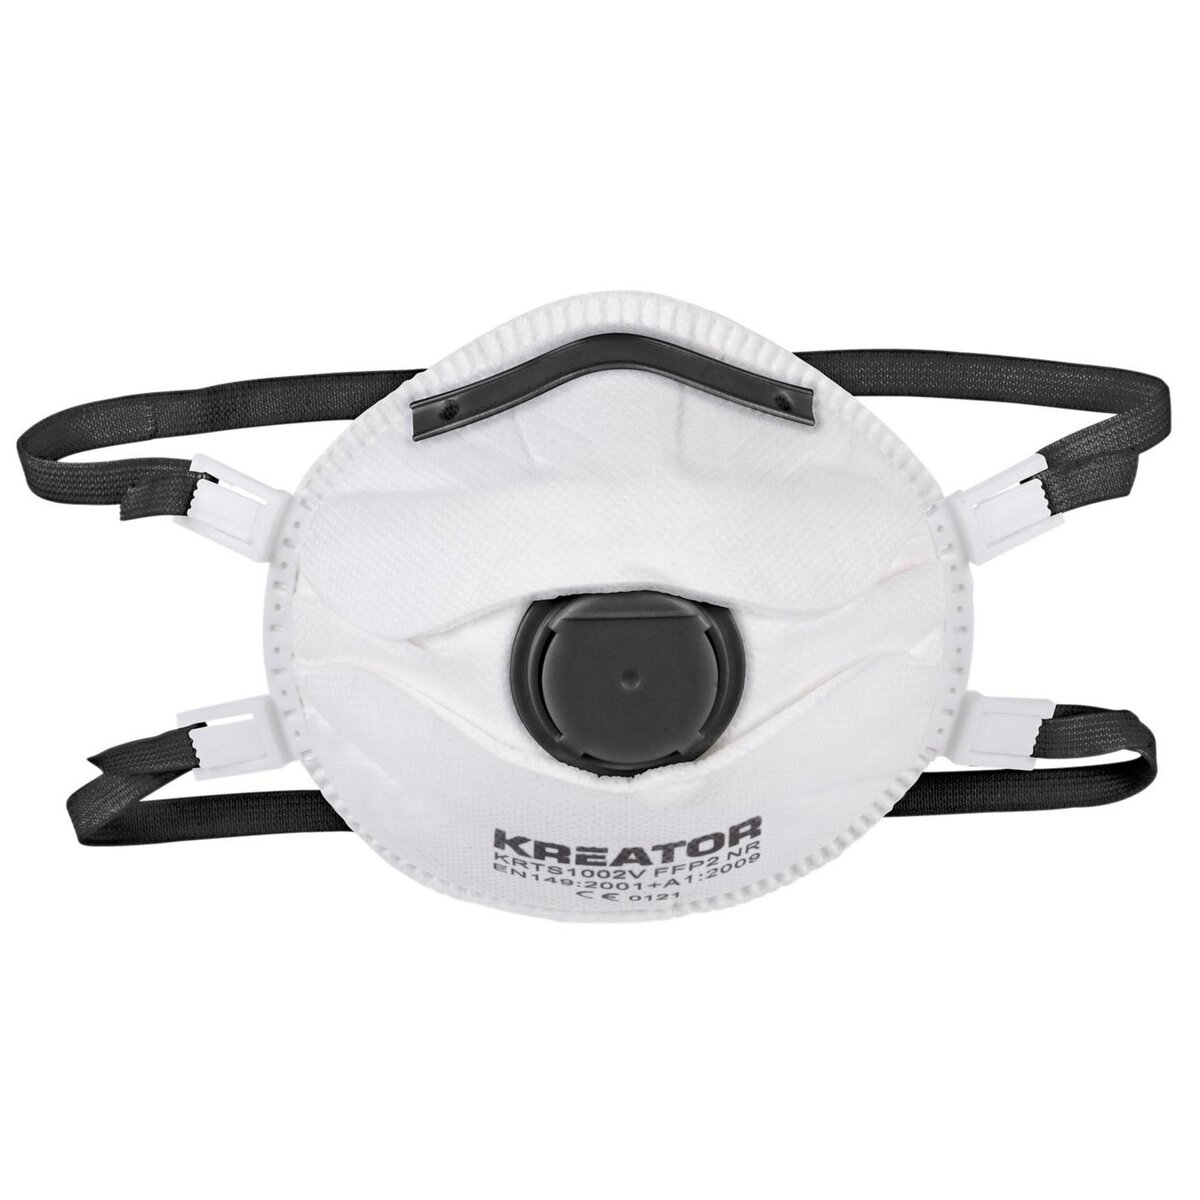 Masque FFP3 anti-poussière : protection respiratoire